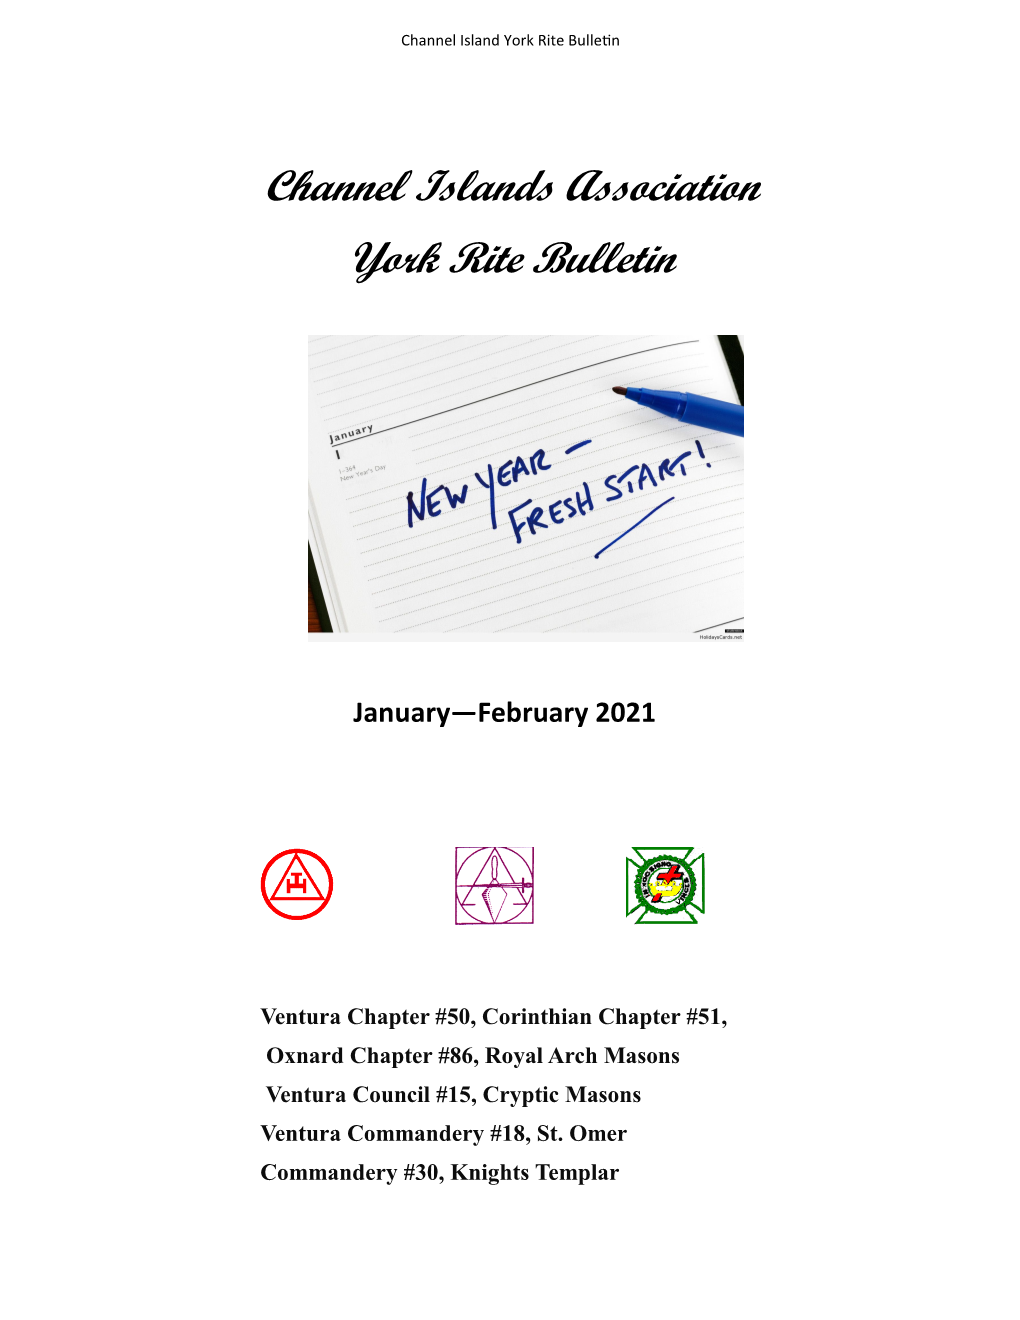 Channel Islands Association York Rite Bulletin